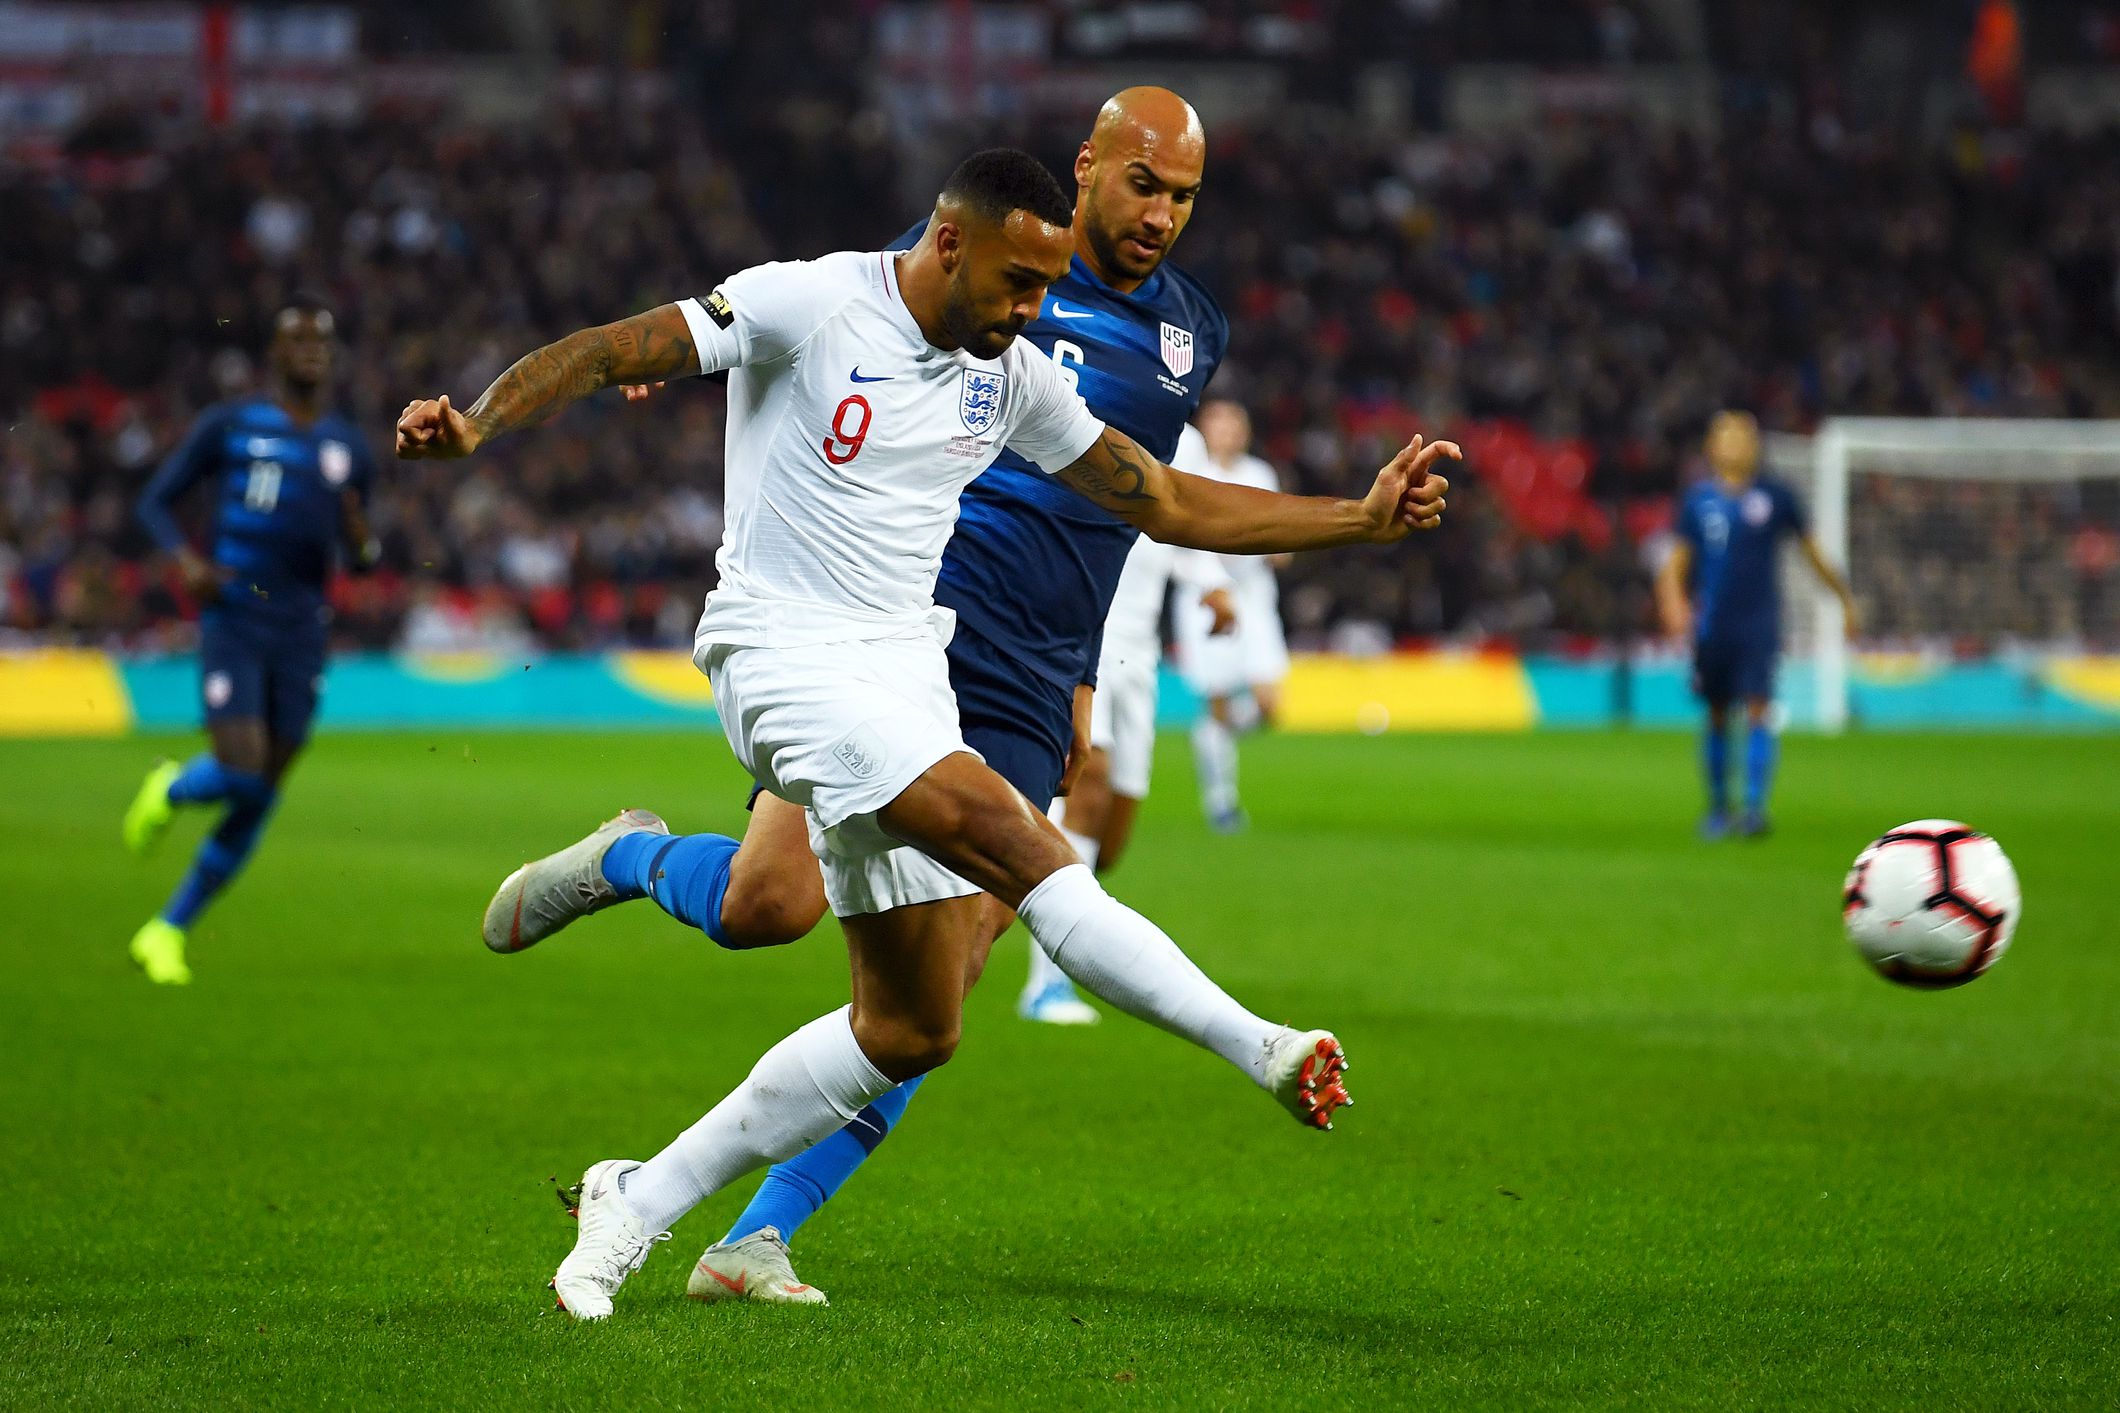 USA vs. England, 2018 Friendly, recap: A listless performance at